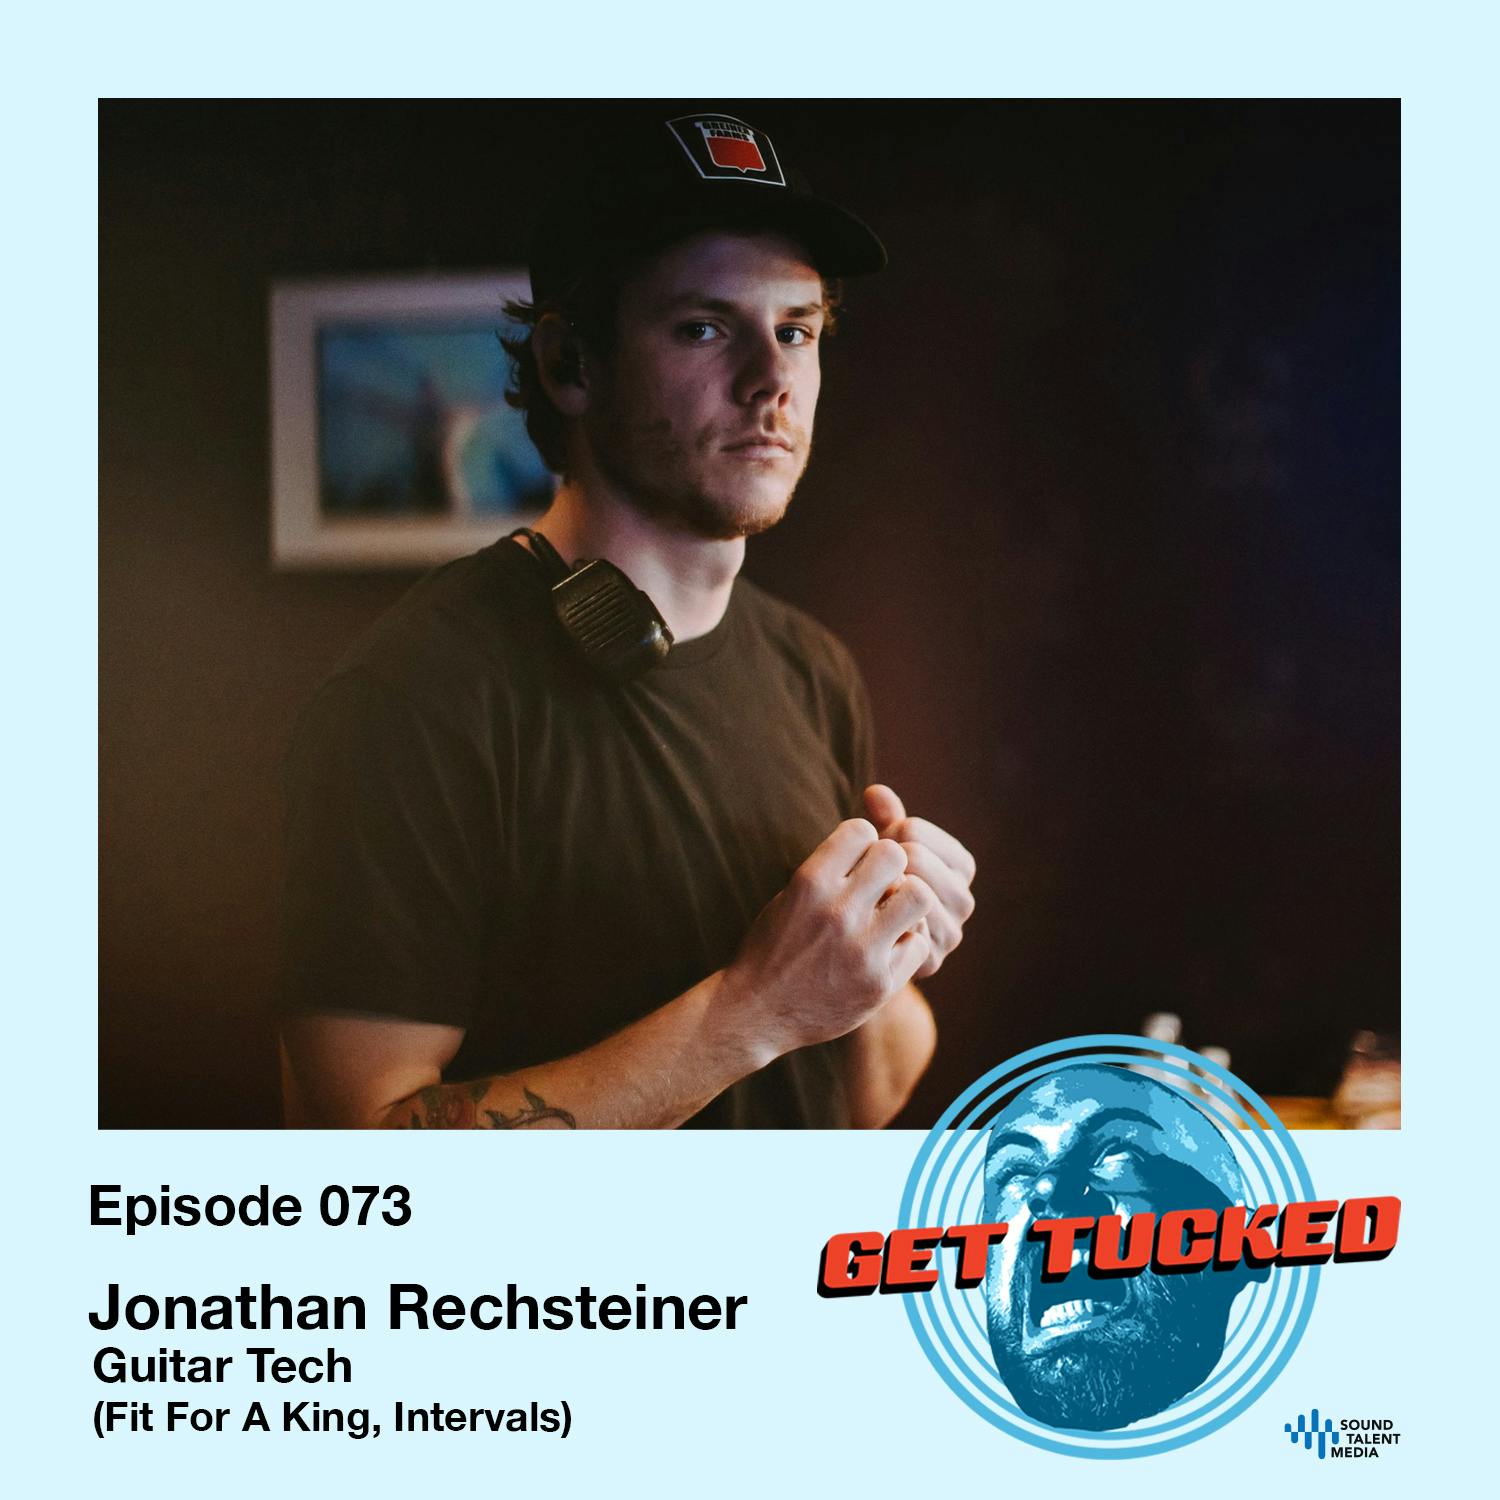 Ep. 73 feat. Jonathan Rechsteiner - Guitar Tech of FFAK/INTERVALS, Guitarist of Our Vices Image